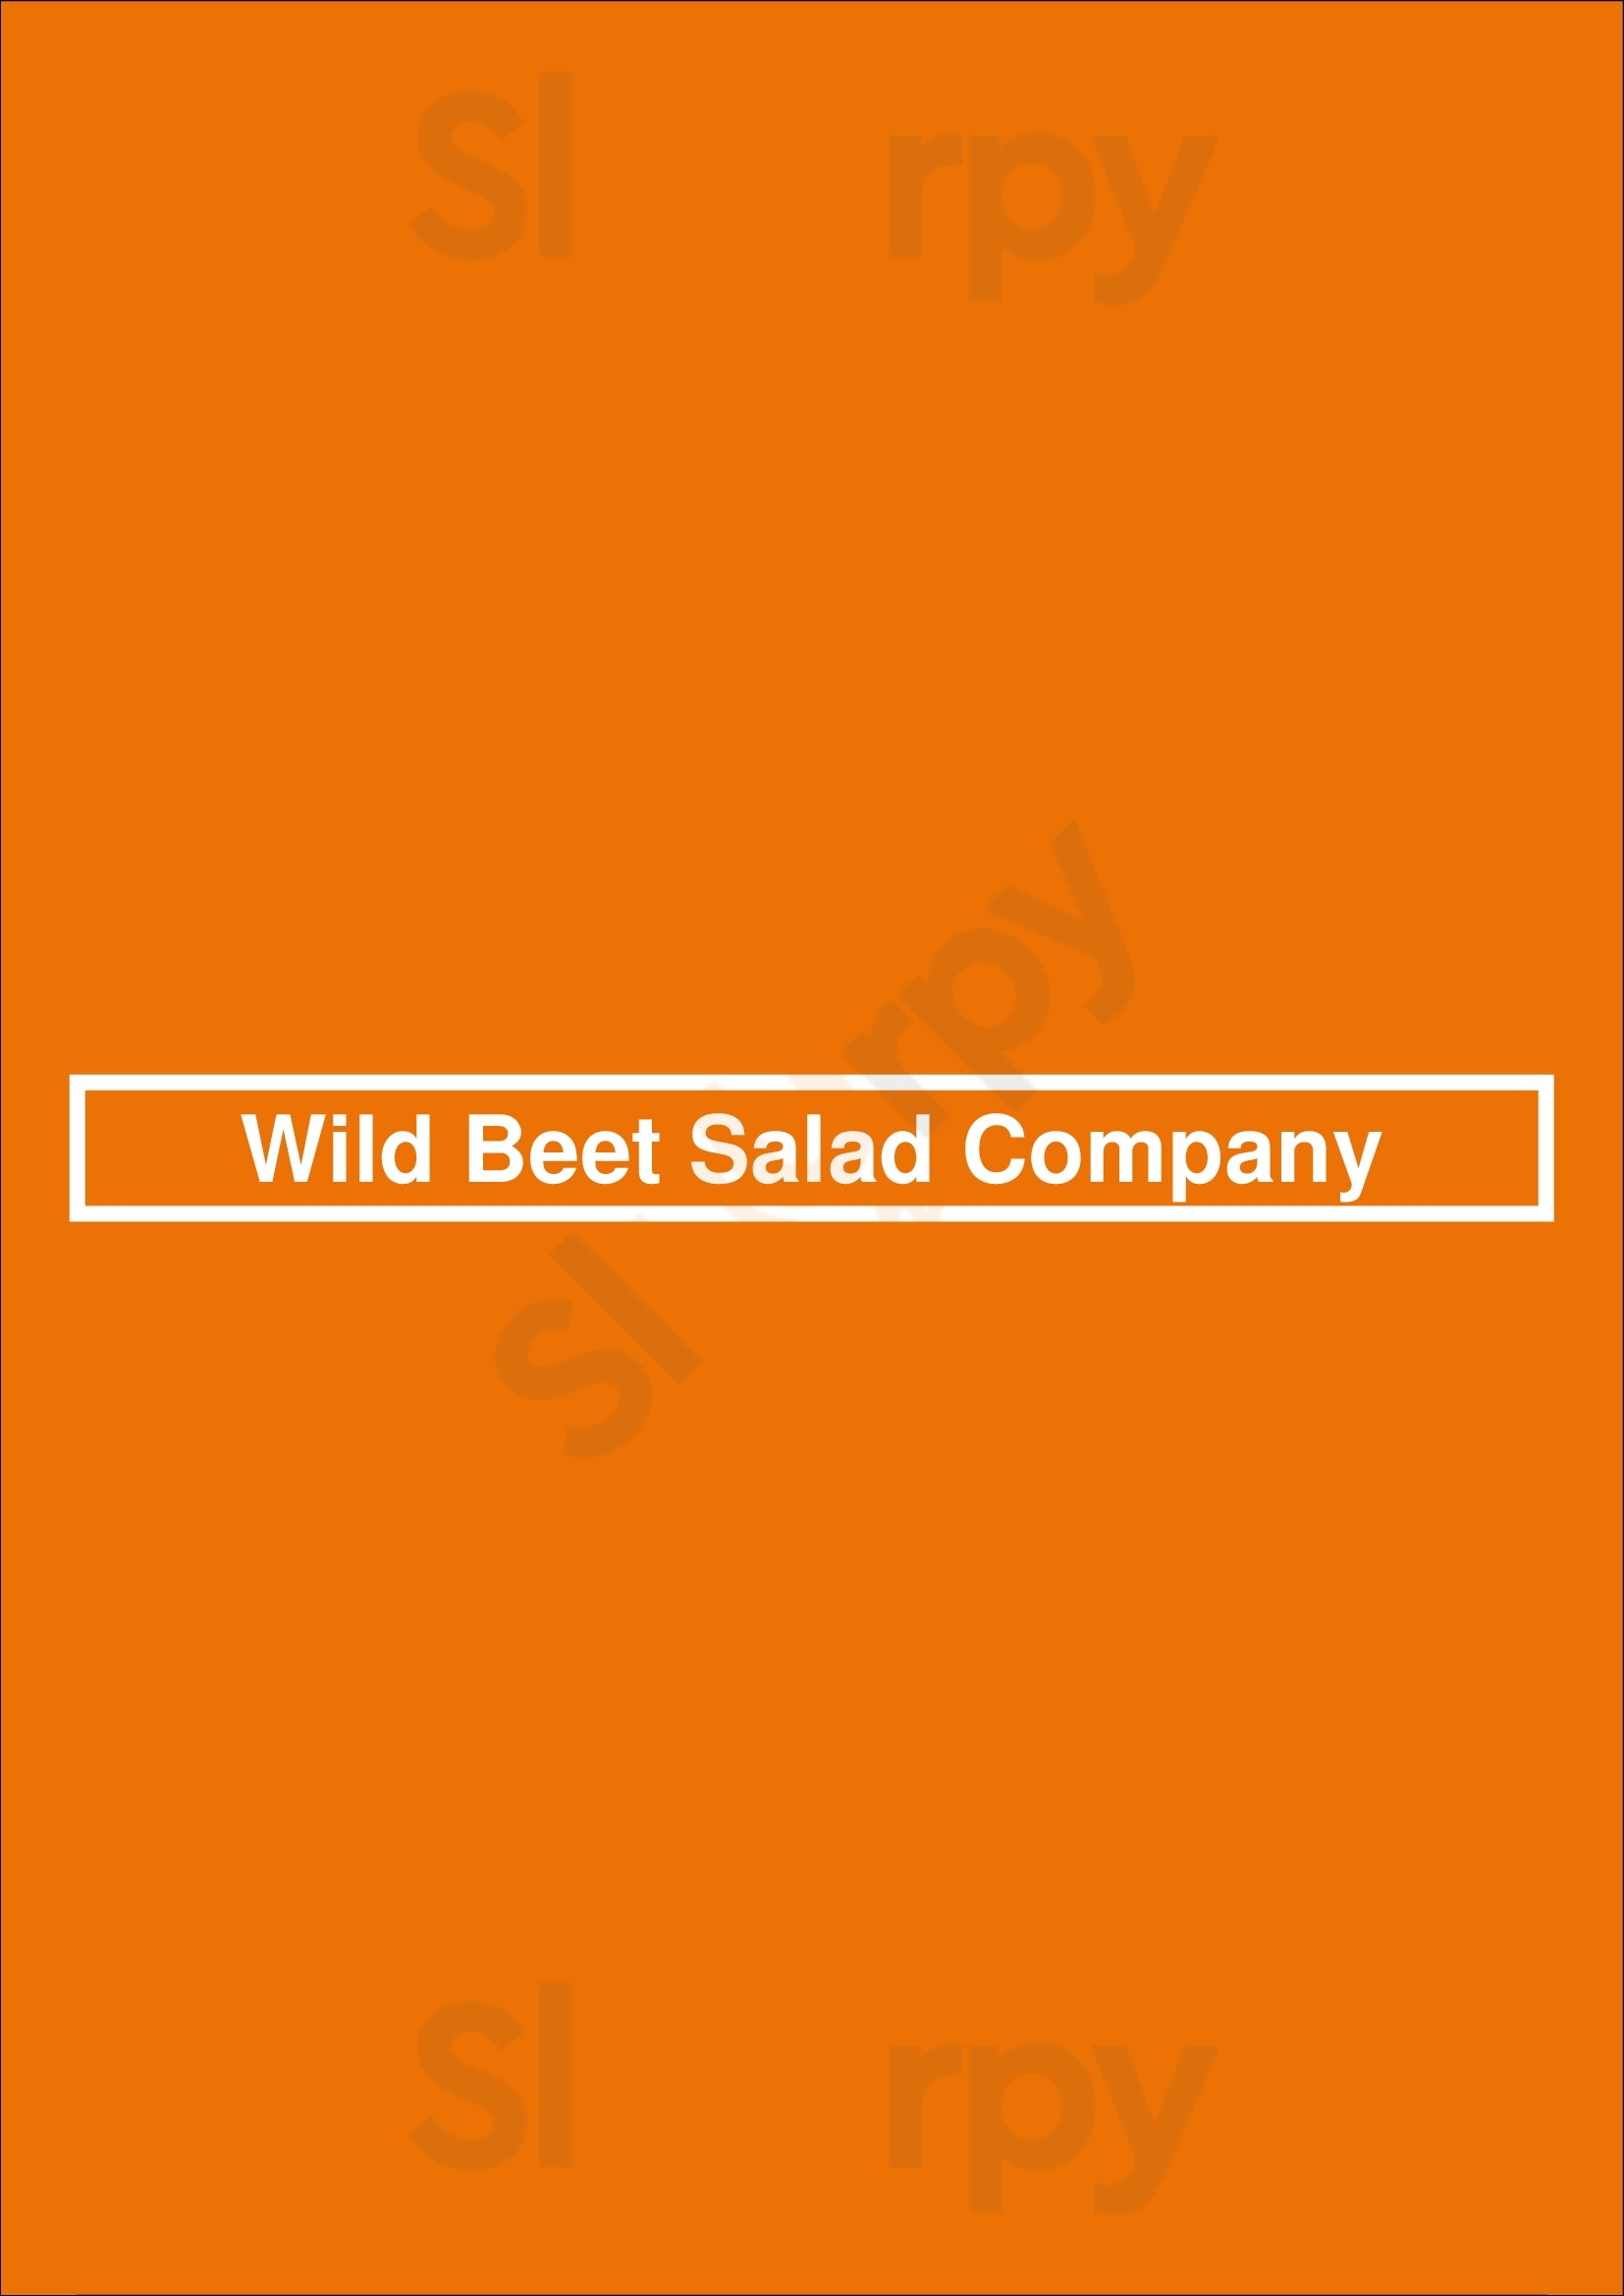 Wild Beet Salad Company Memphis Menu - 1